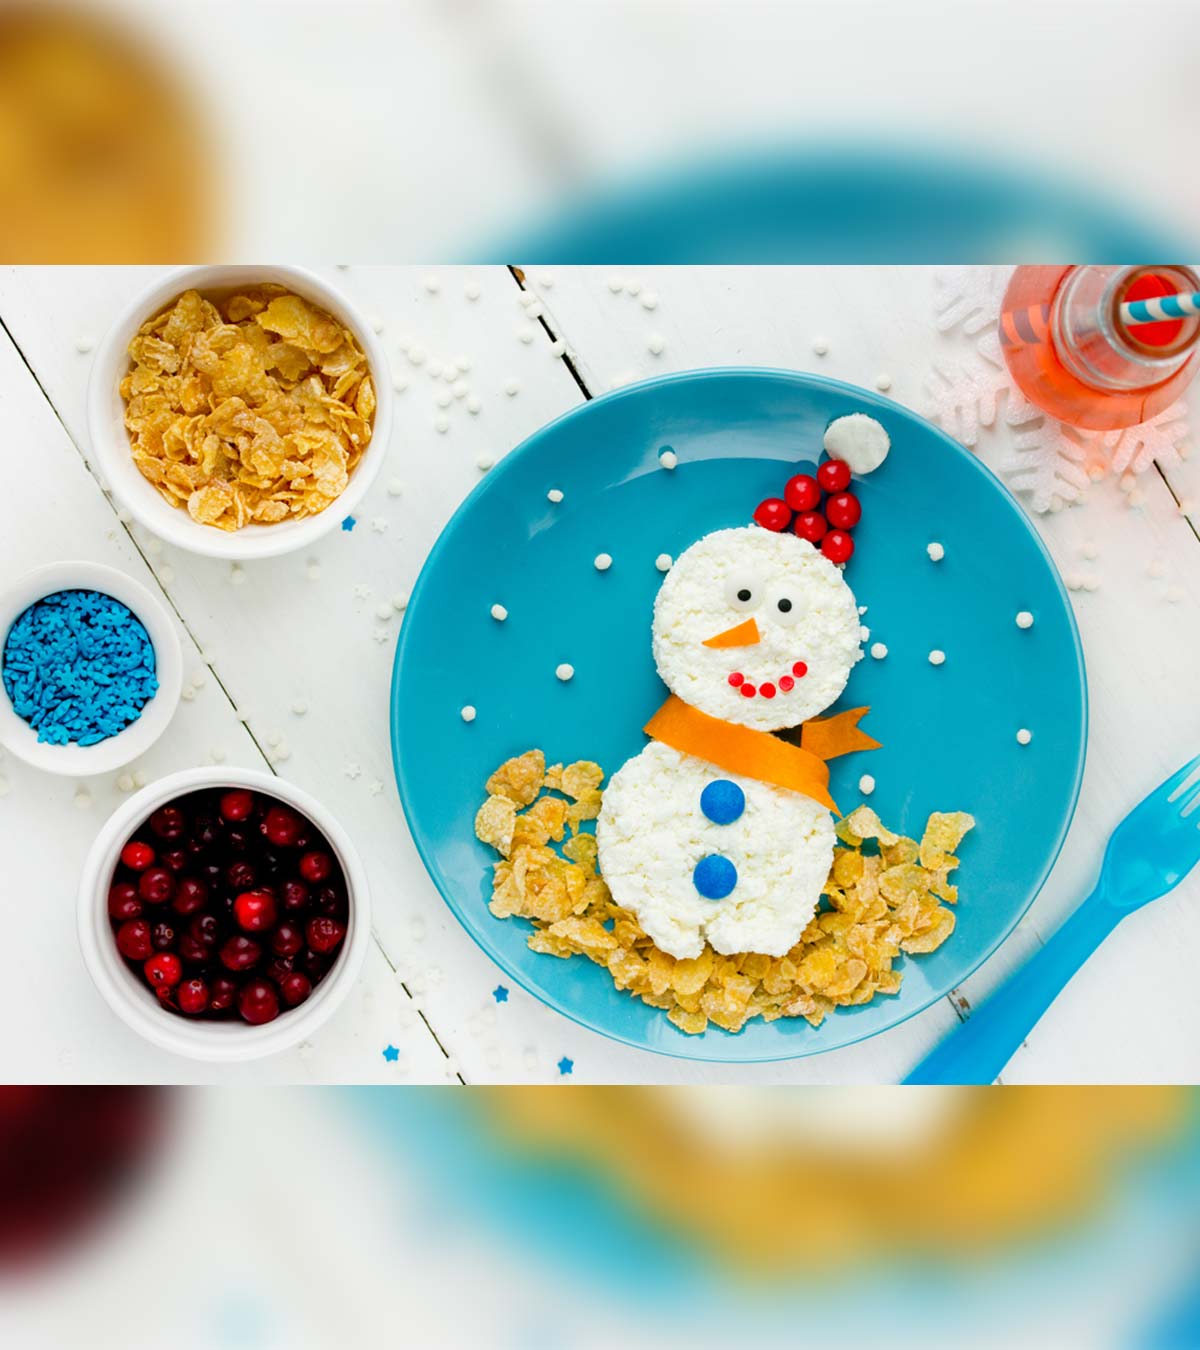 22 Cute & Healthy Christmas Snacks For Kids